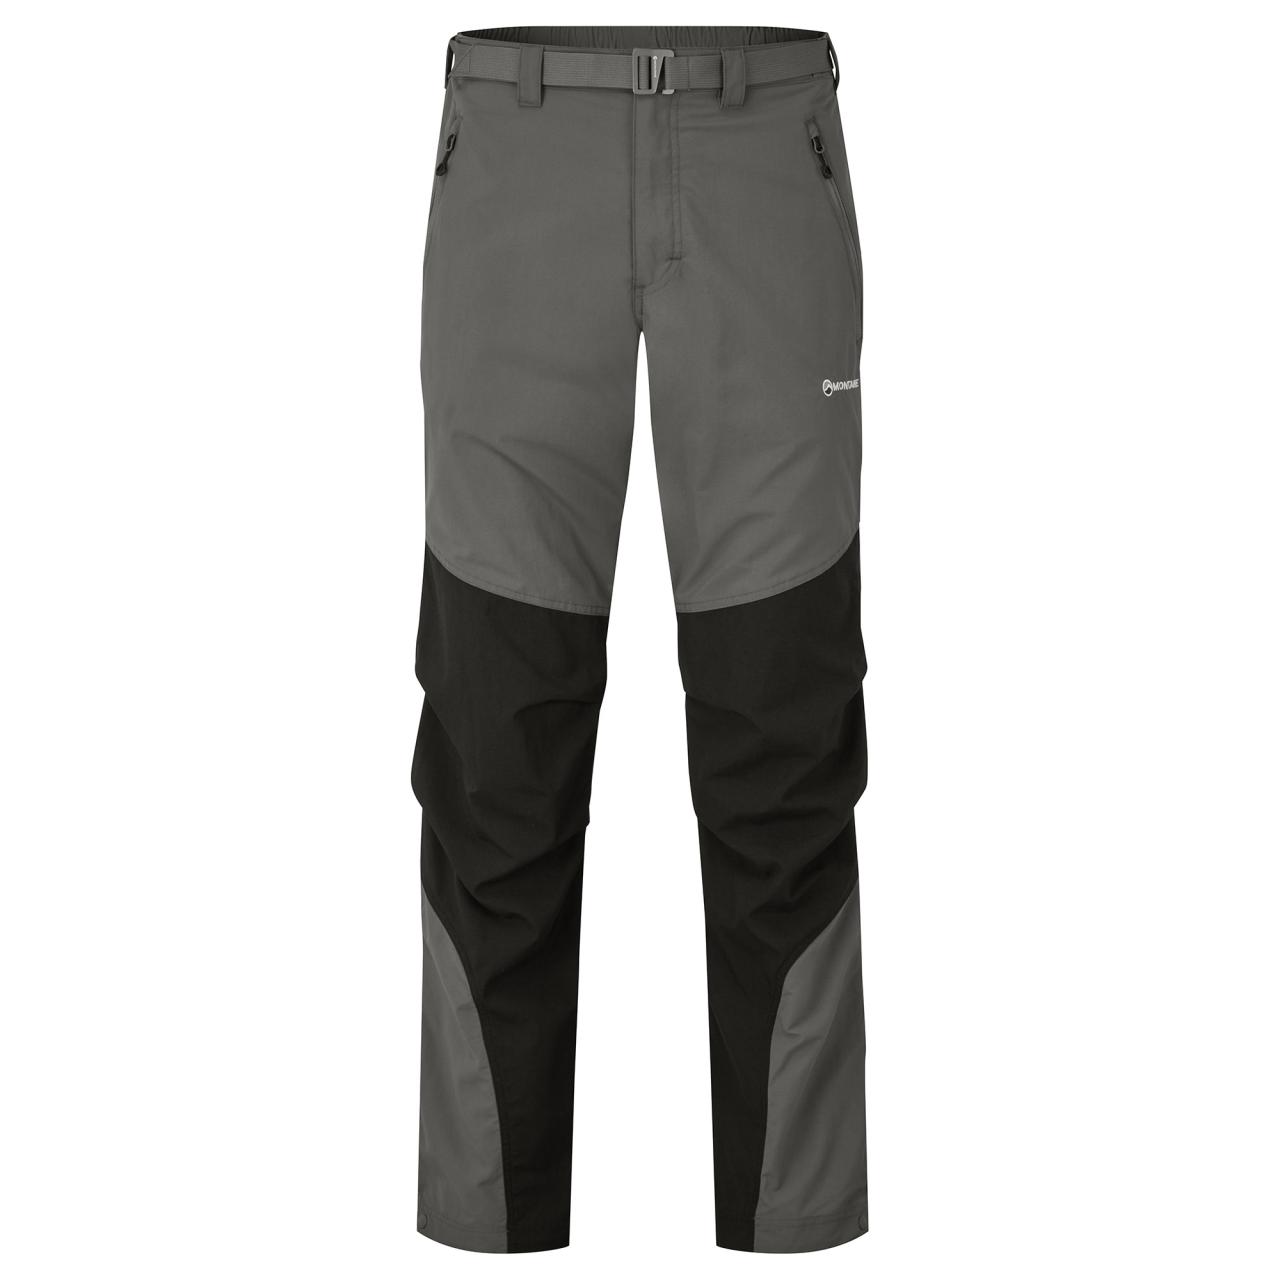 TERRA PANTS REG LEG-GRAPHITE-32/M pánské kalhoty šedé